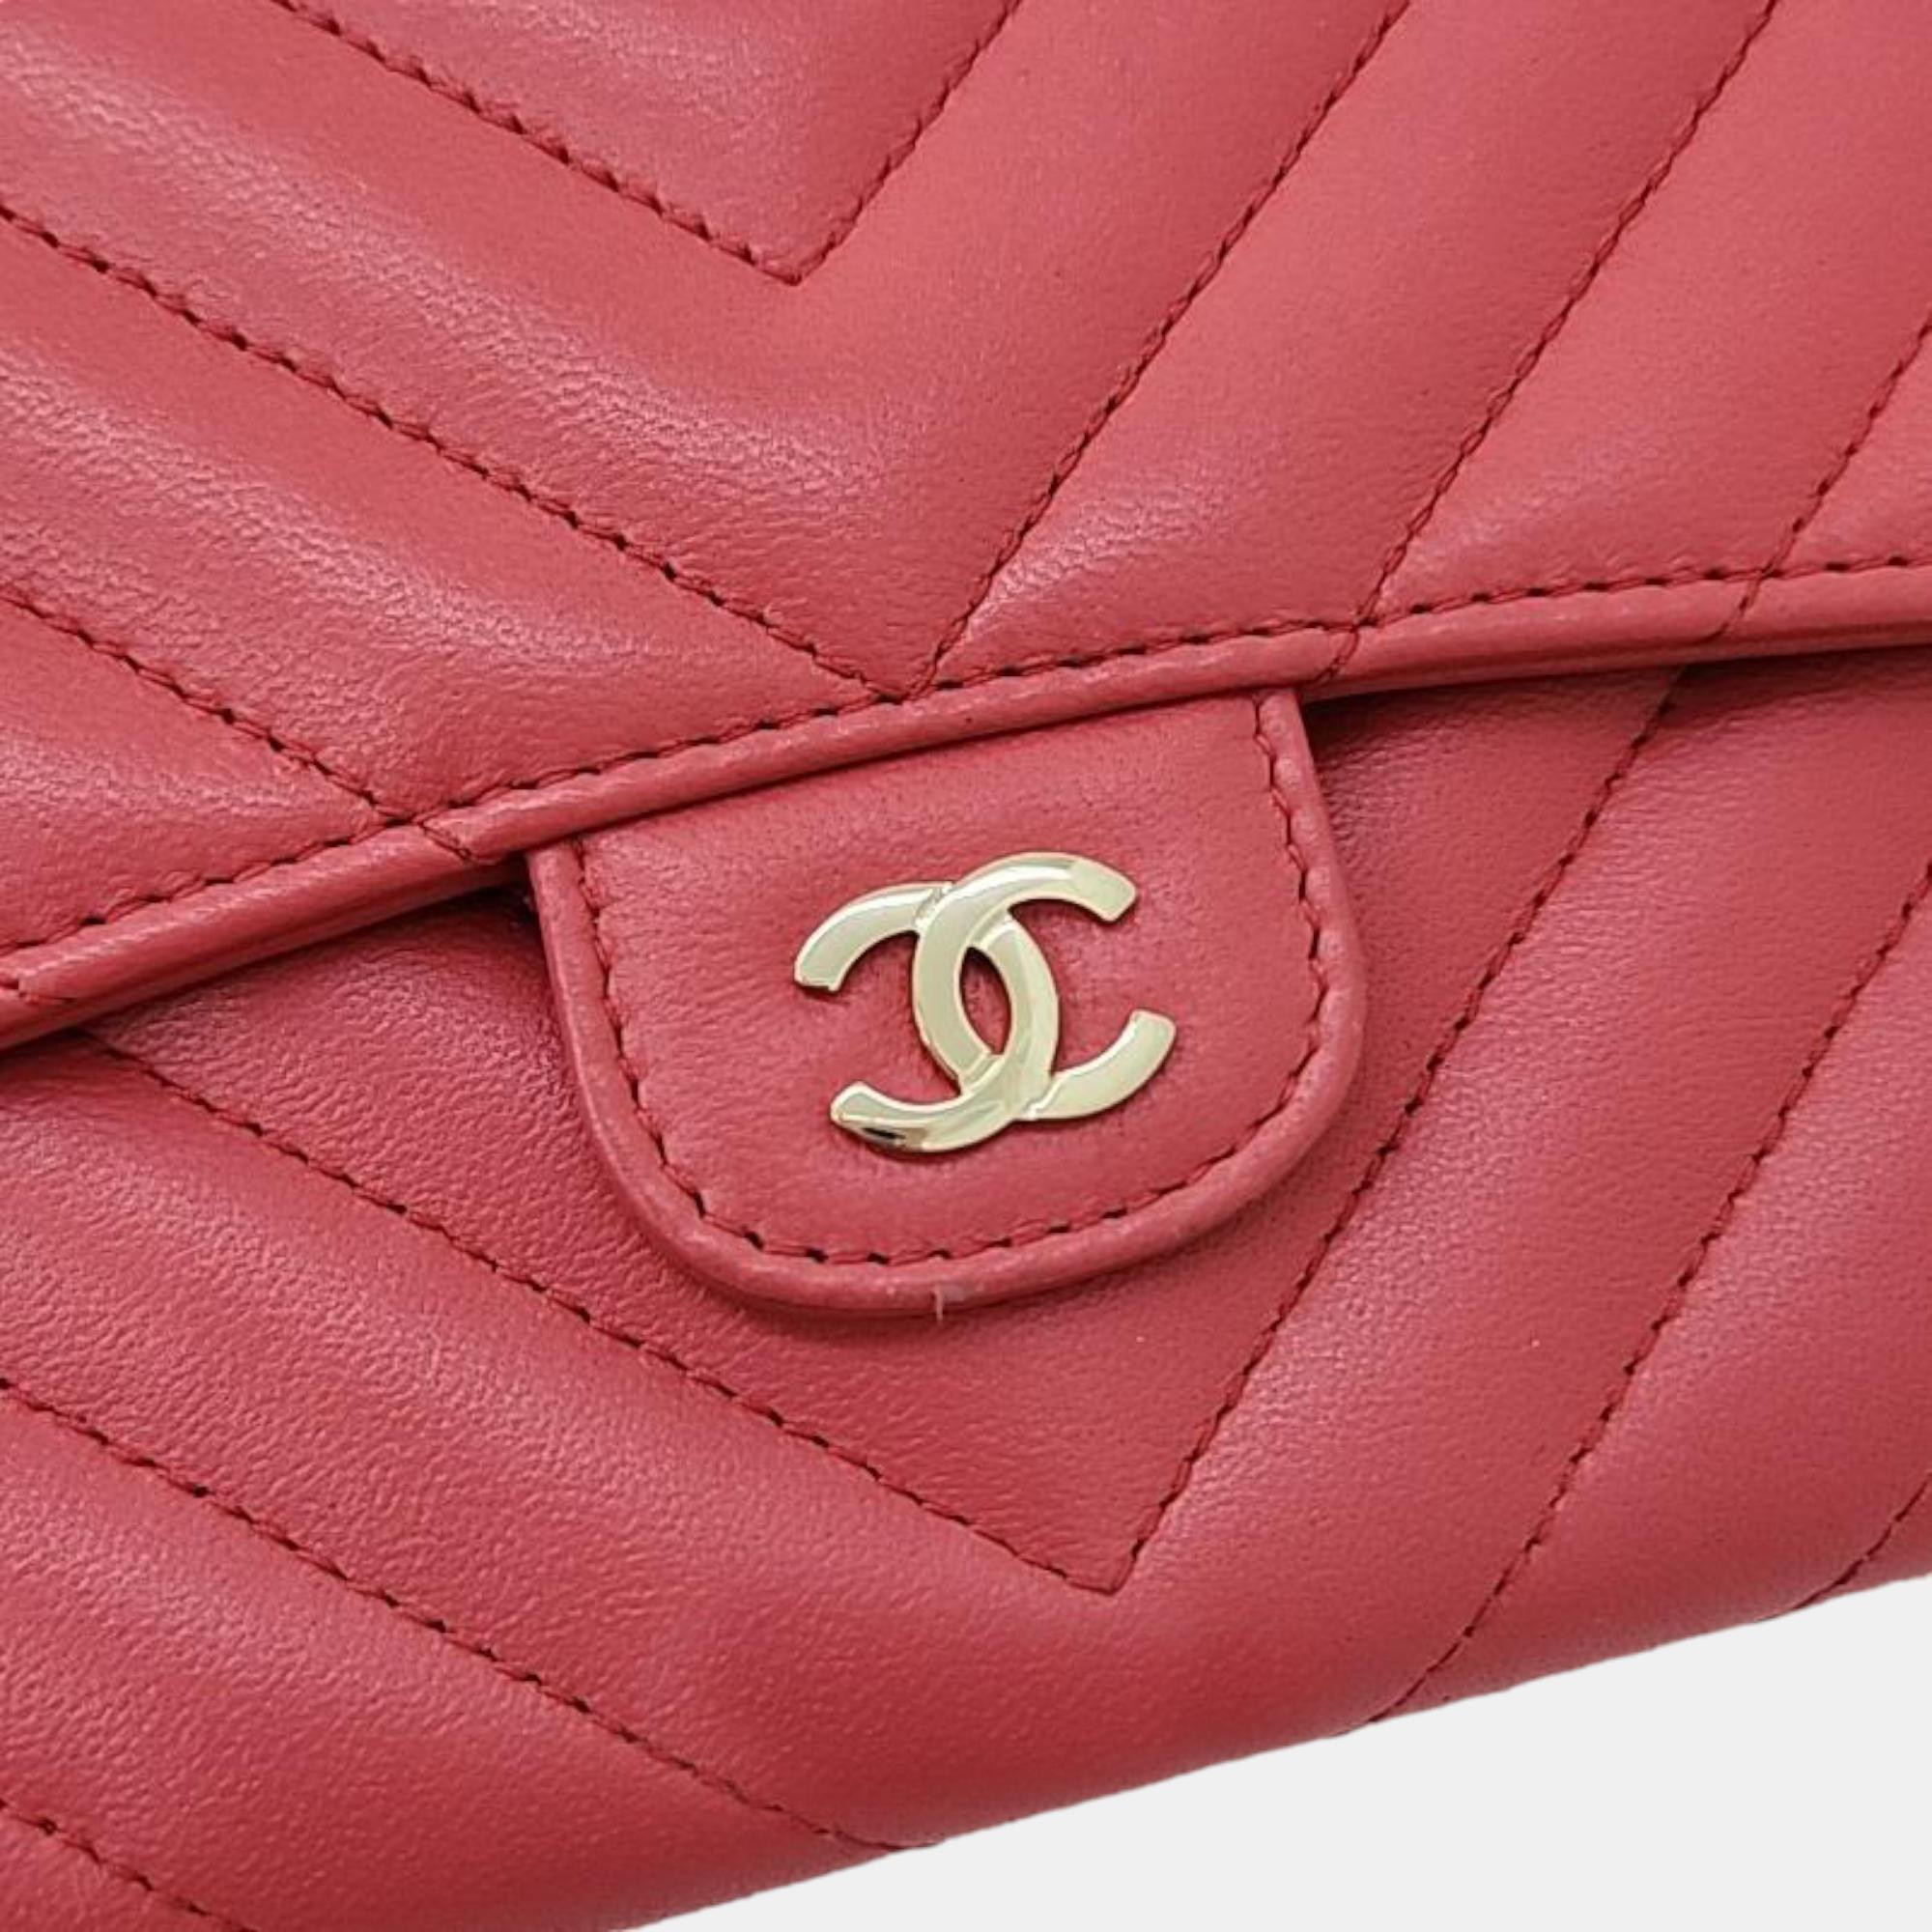 Chanel Pink Chevron Long Wallet